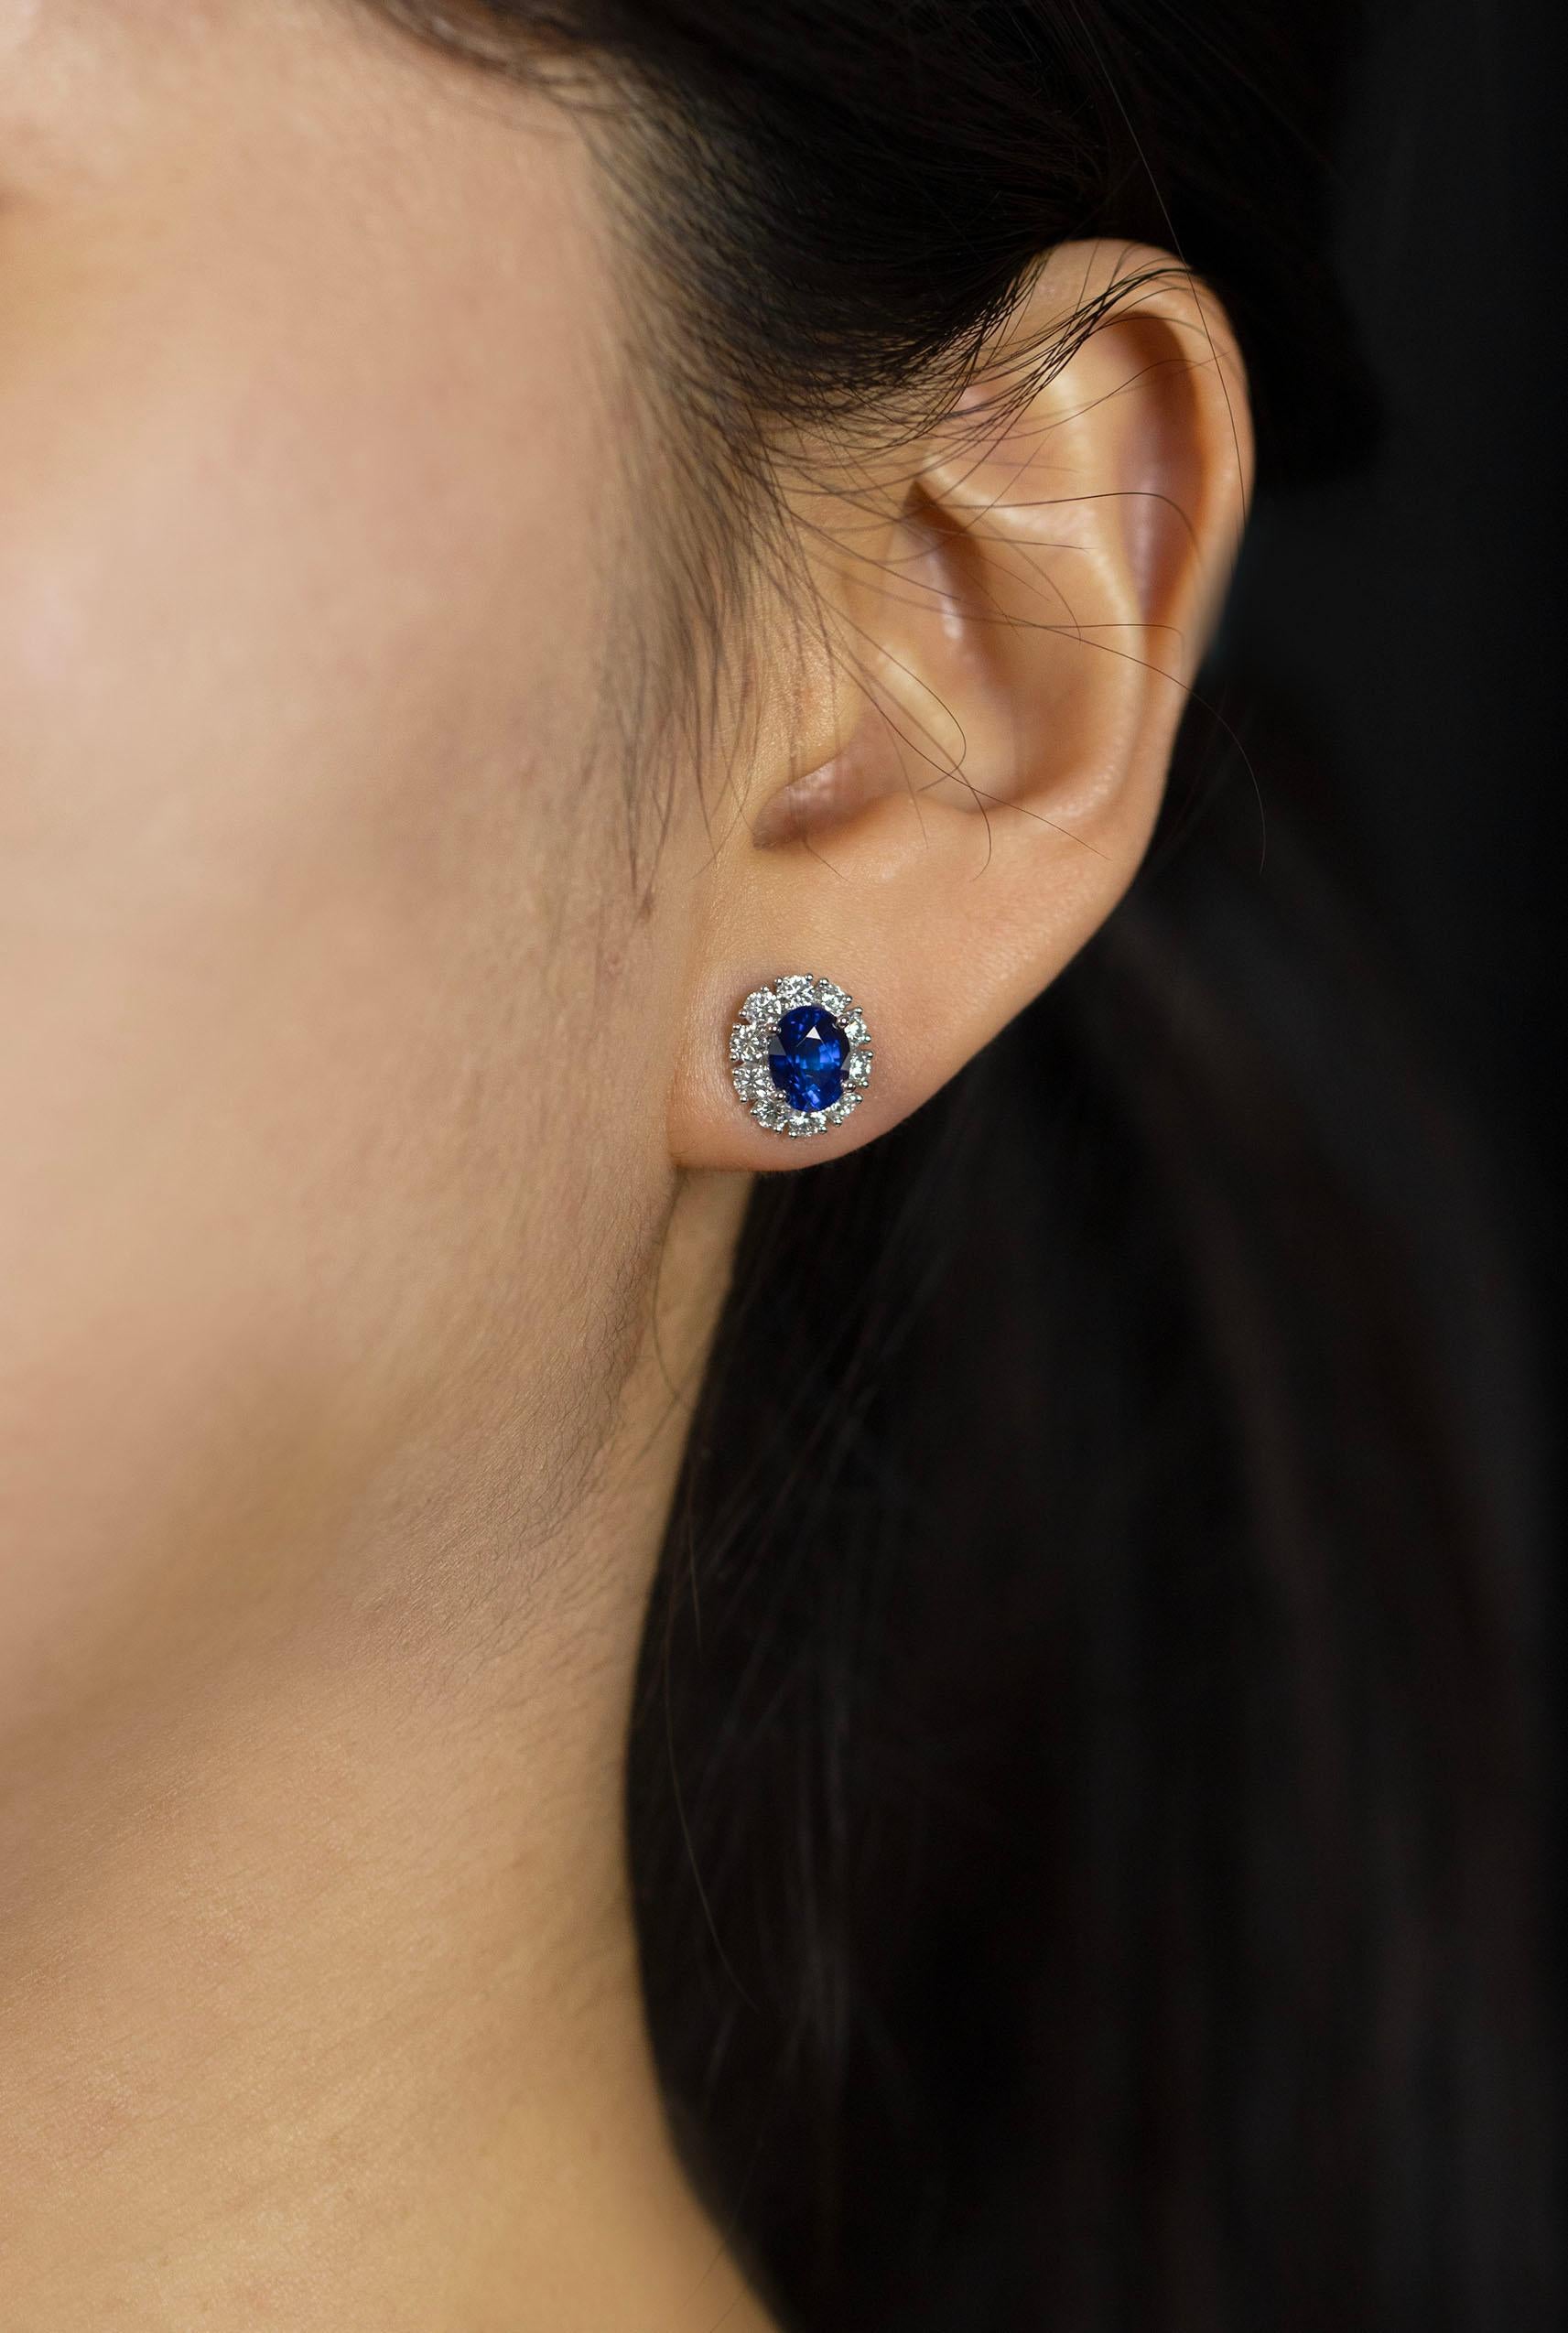 Roman Malakov 2.29 Carats Total Oval Cut Blue Sapphire & Diamond Stud Earrings For Sale 1